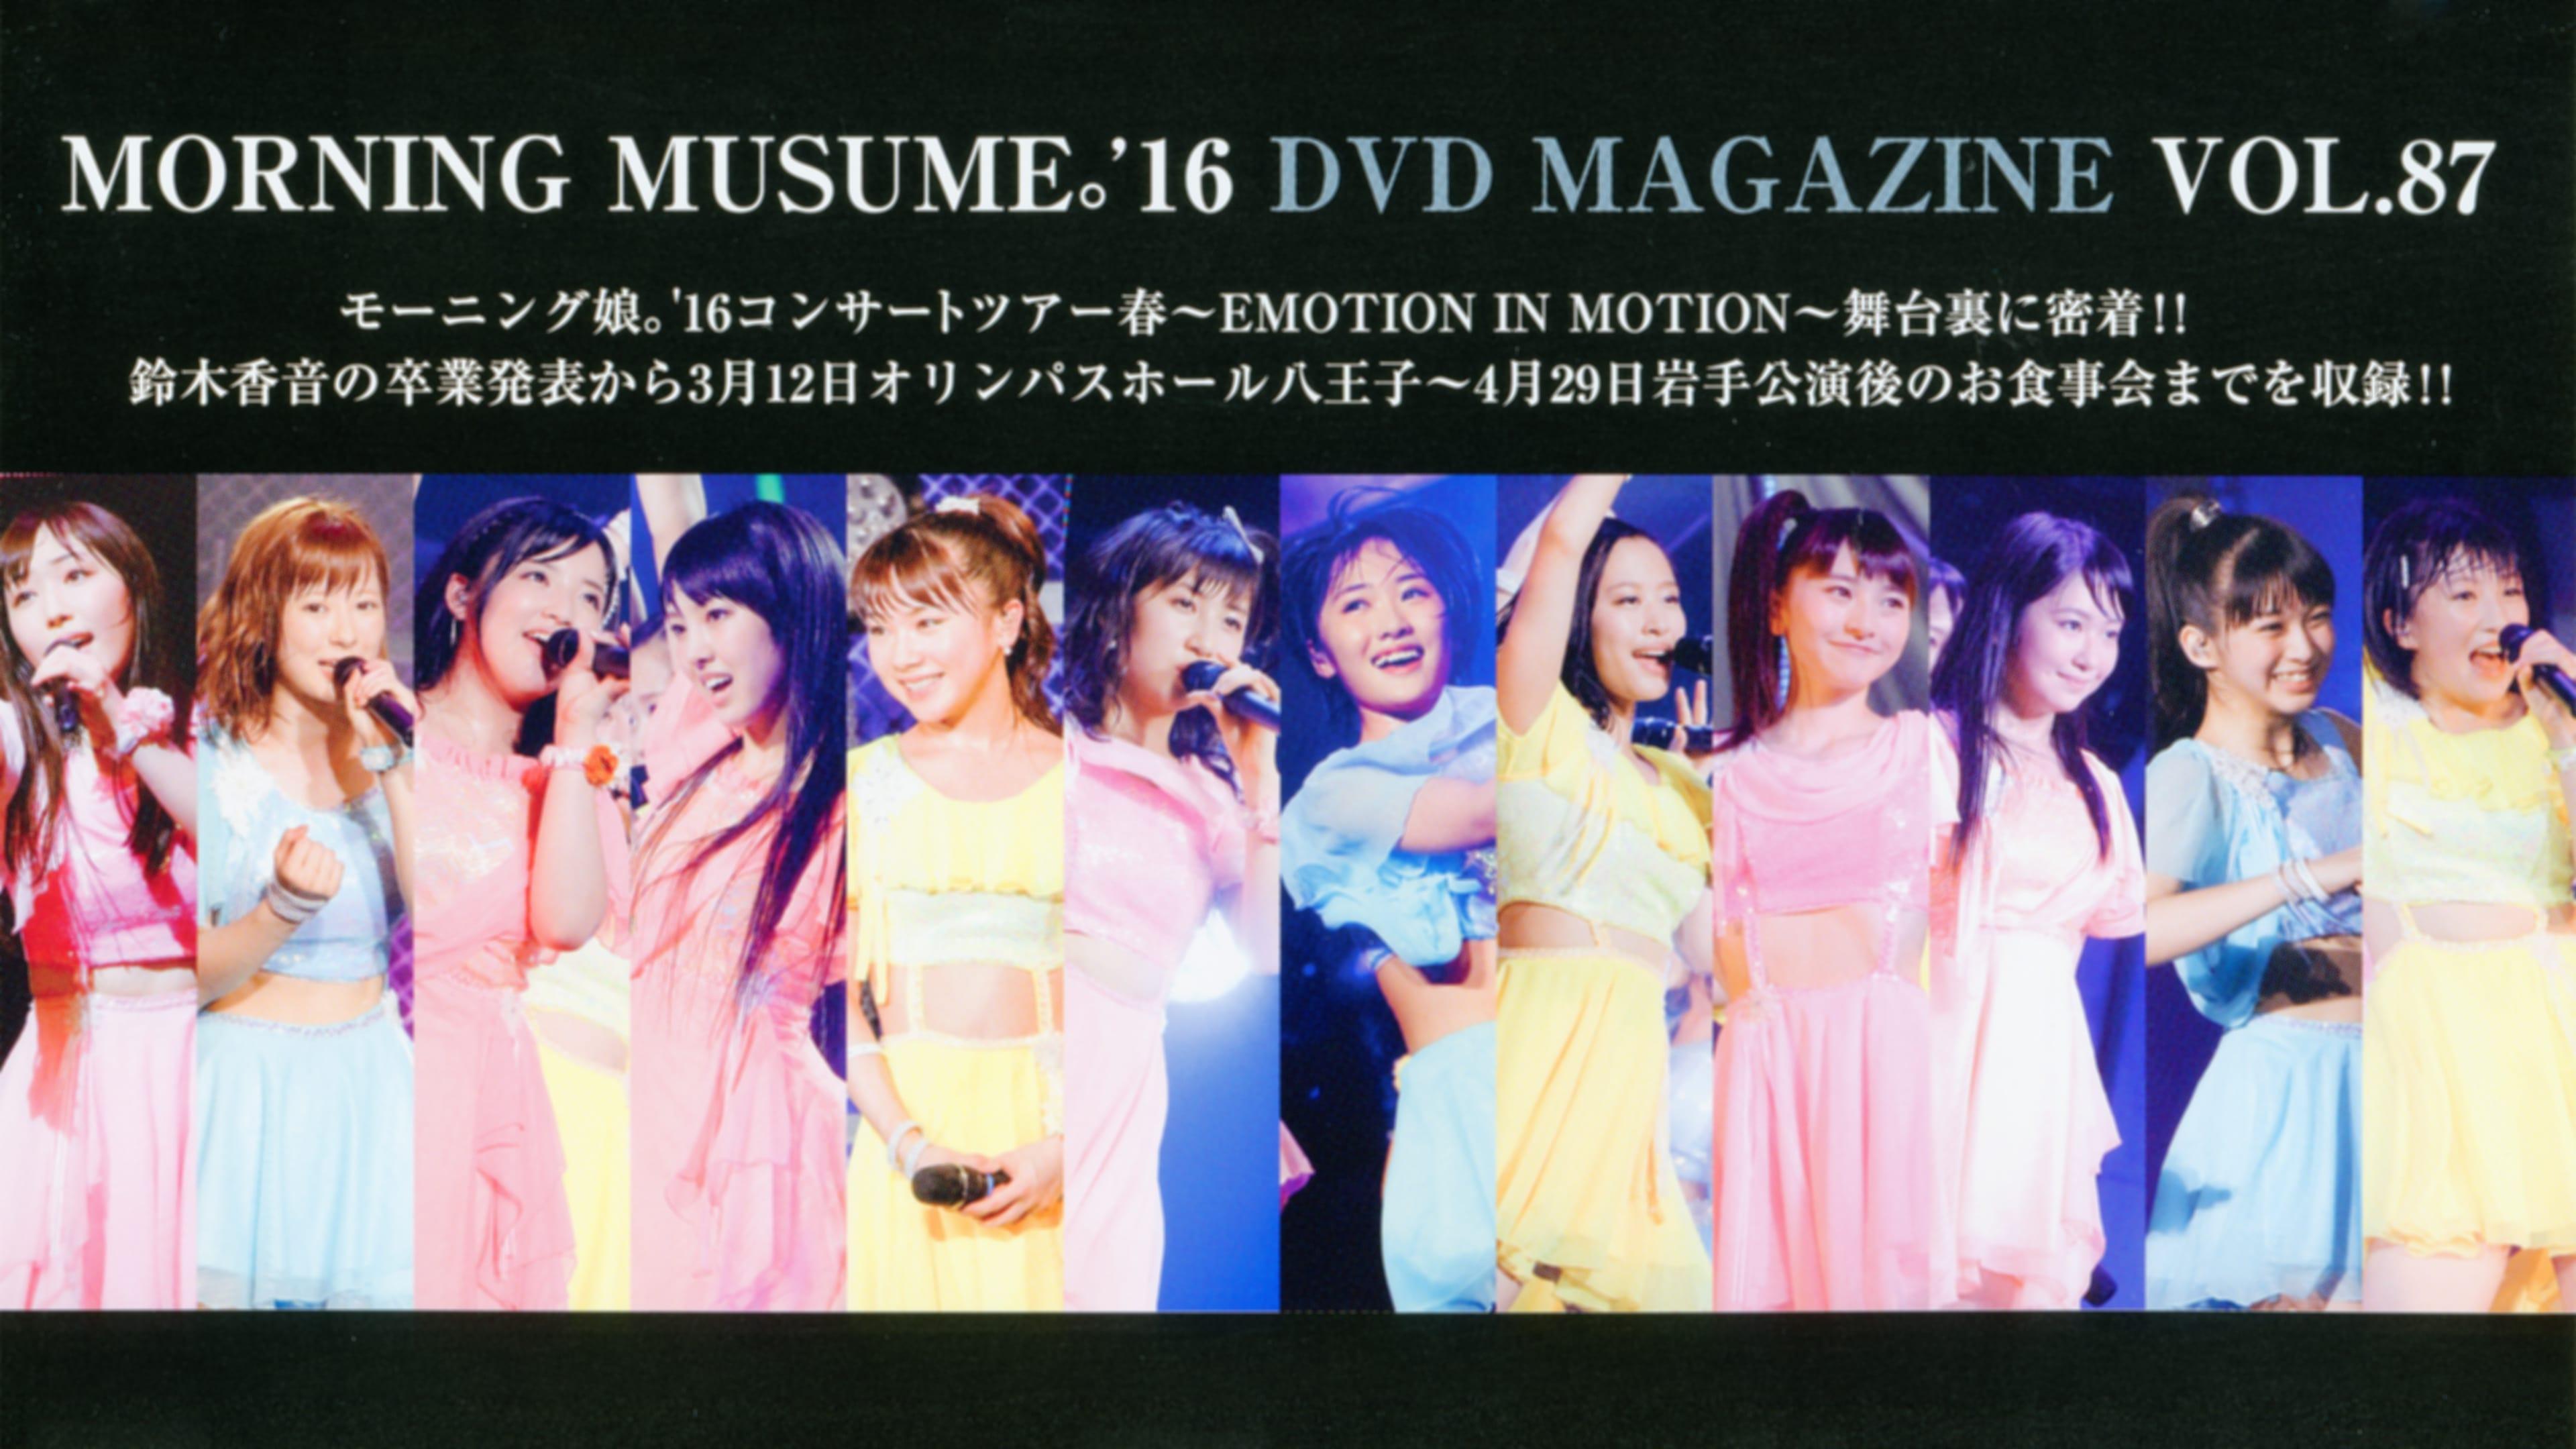 Morning Musume.'16 DVD Magazine Vol.87 backdrop